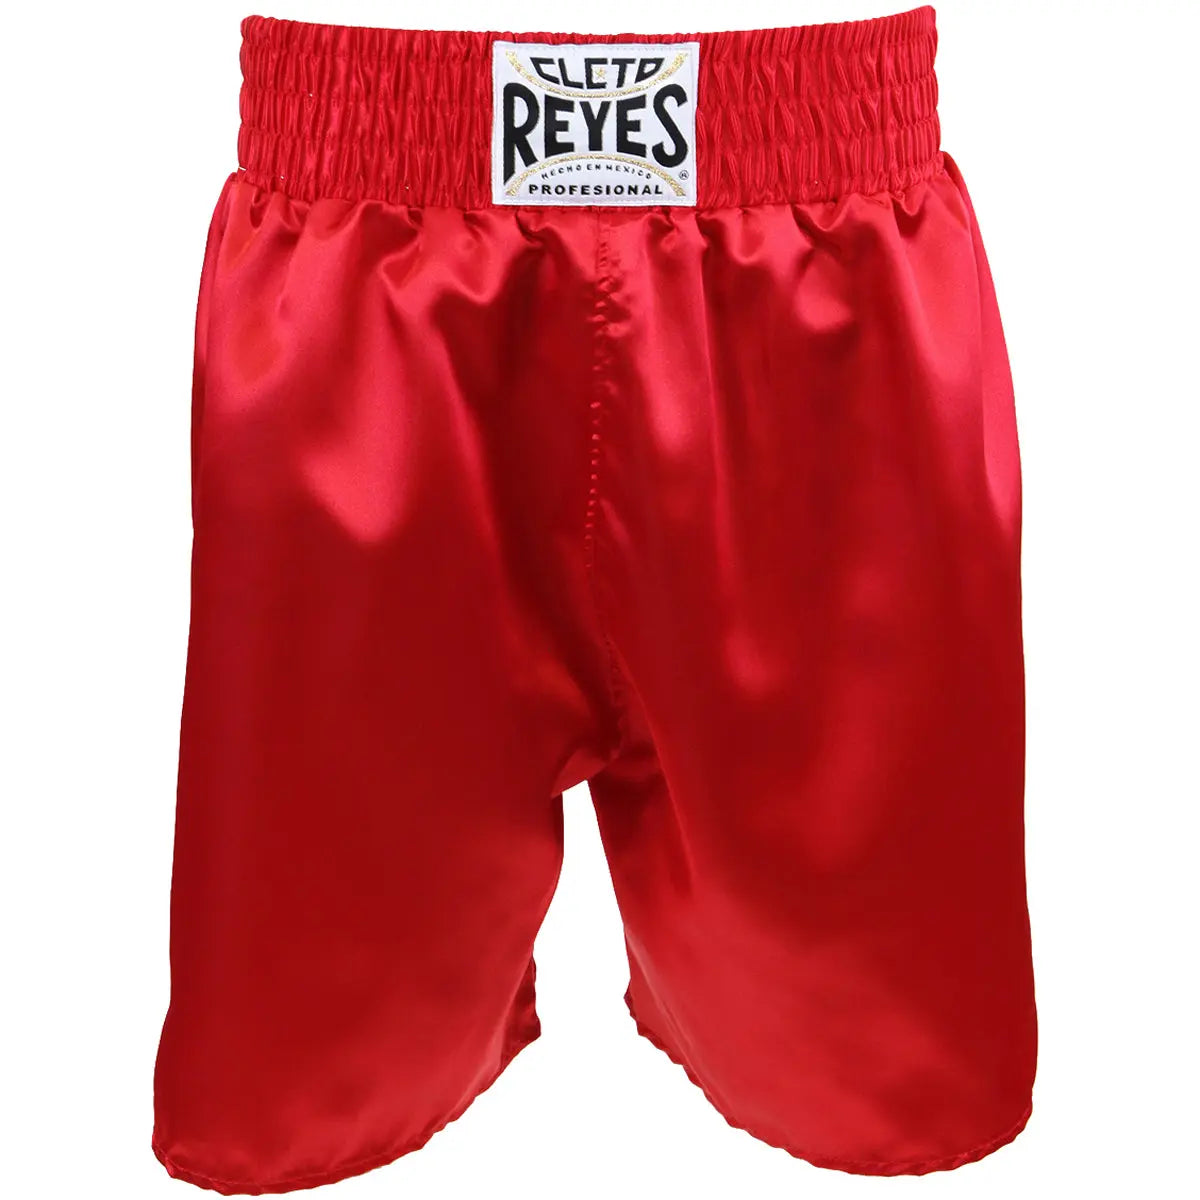 Cleto Reyes Satin Classic Boxing Trunks - Red Cleto Reyes